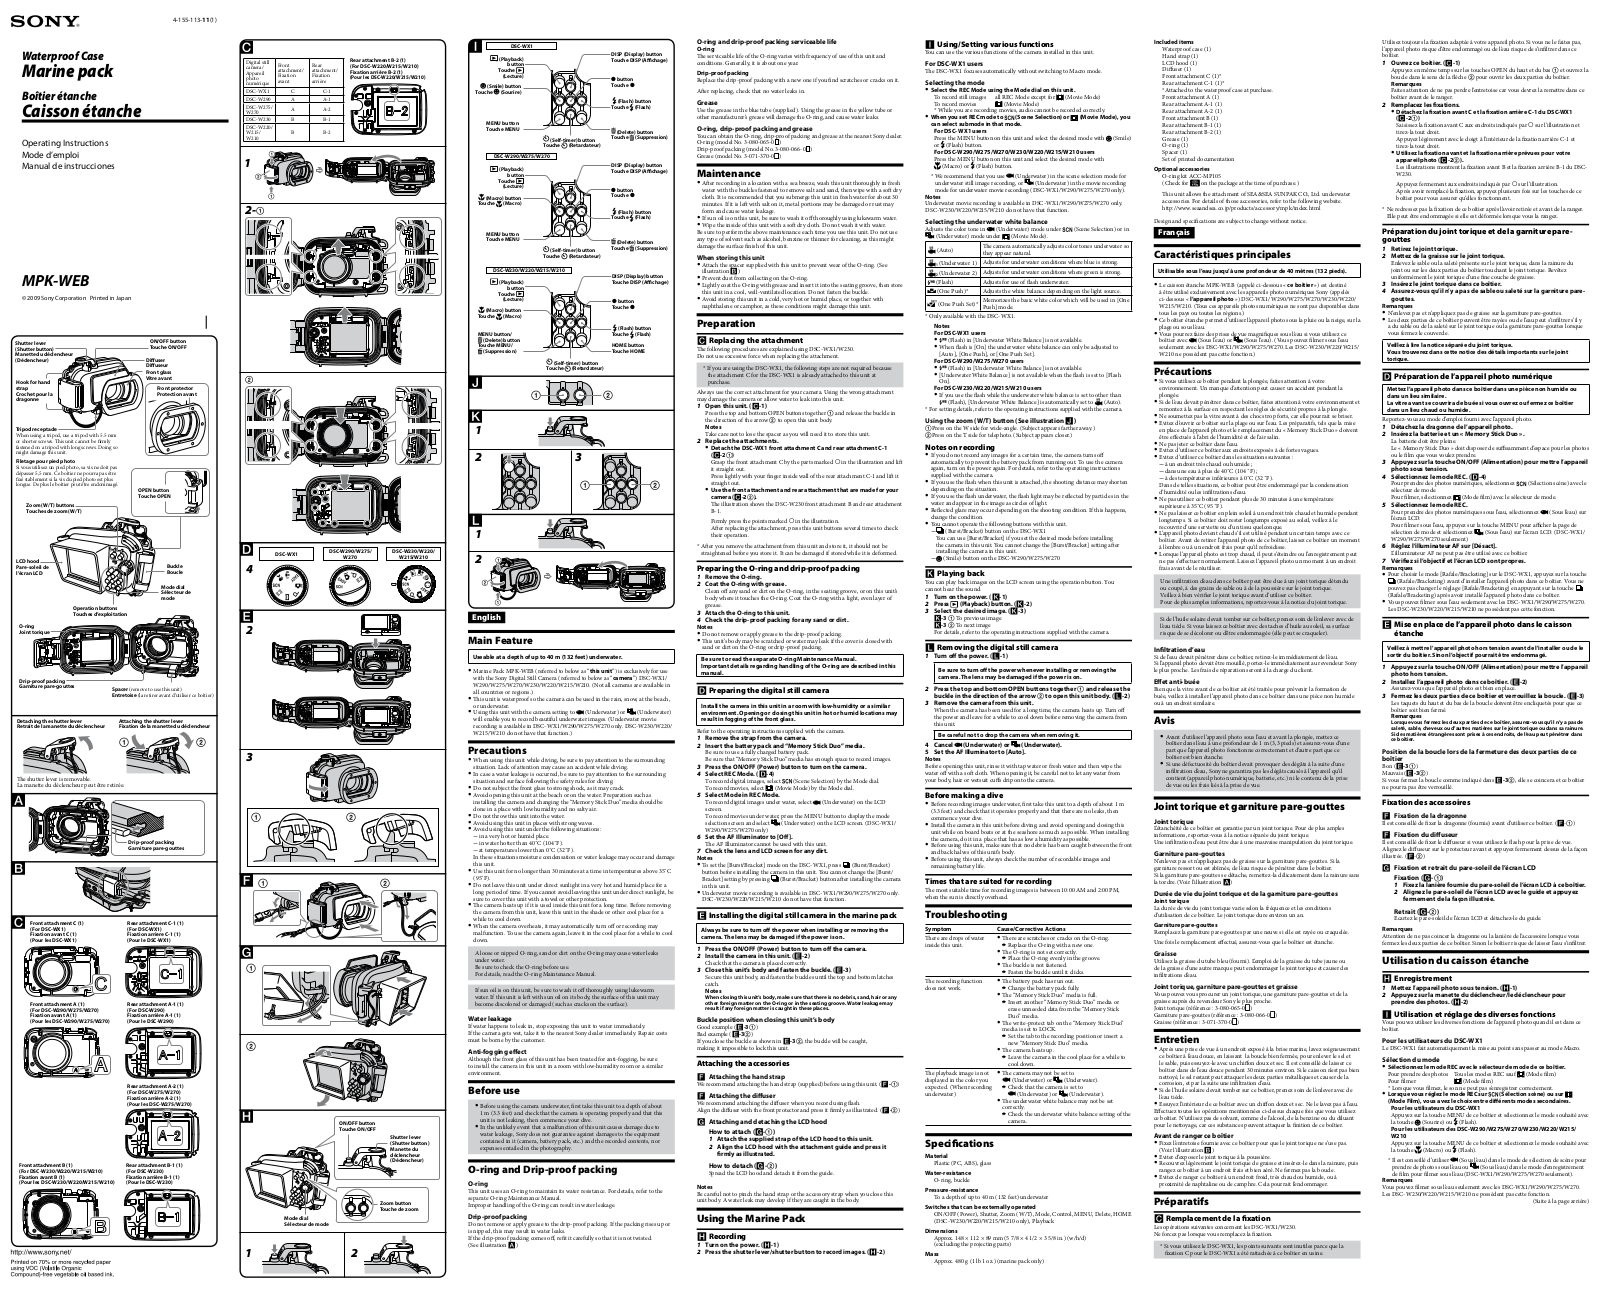 Sony MPK-WEB User Manual